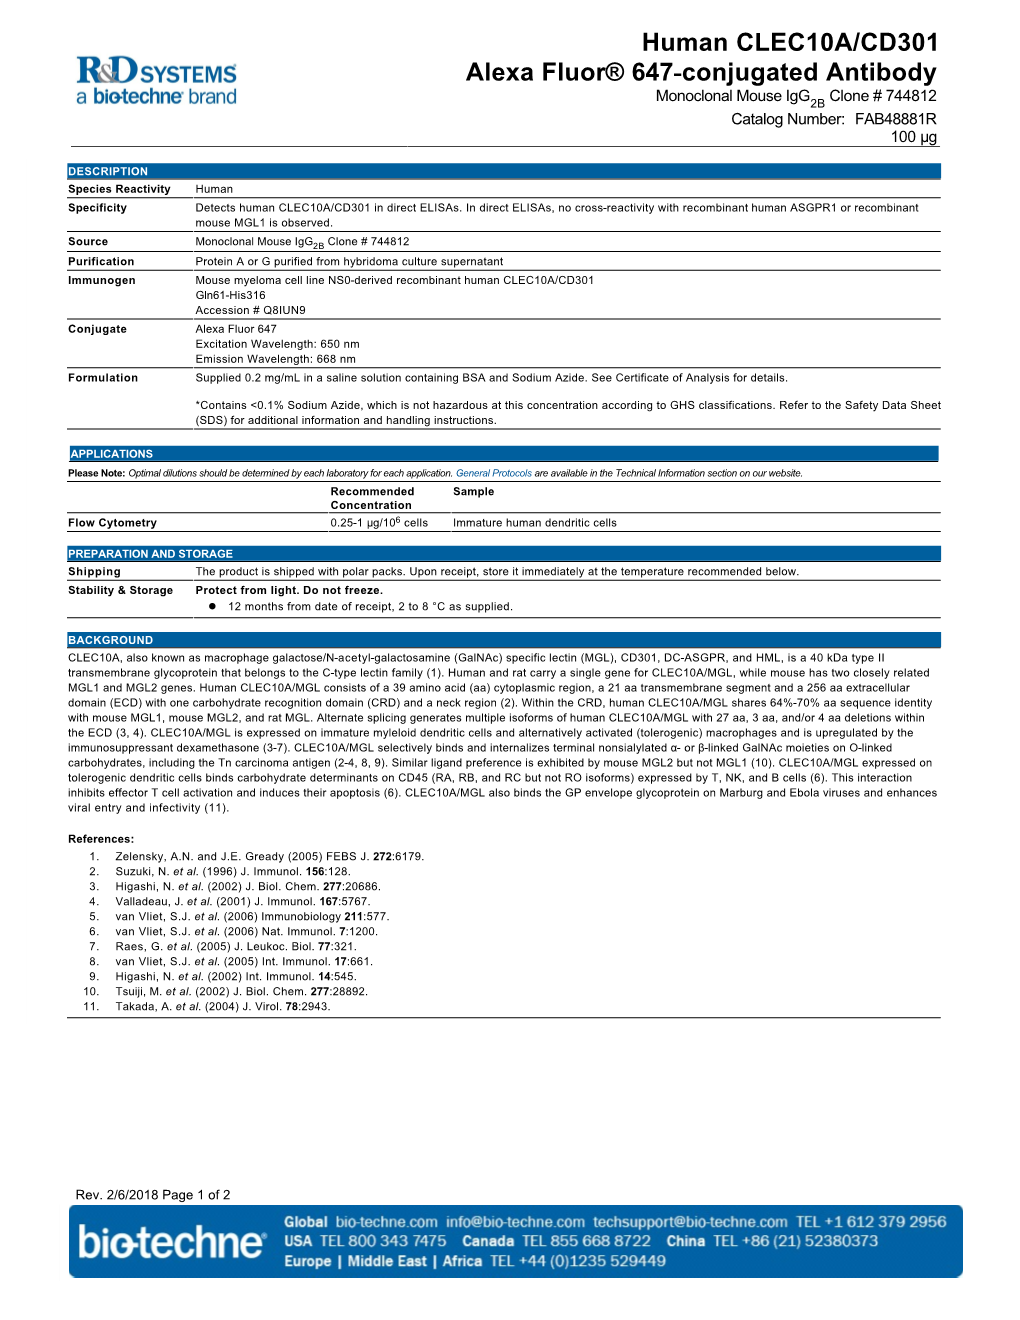 Human CLEC10A/CD301 Alexa Fluor® 647-Conjugated Antibody